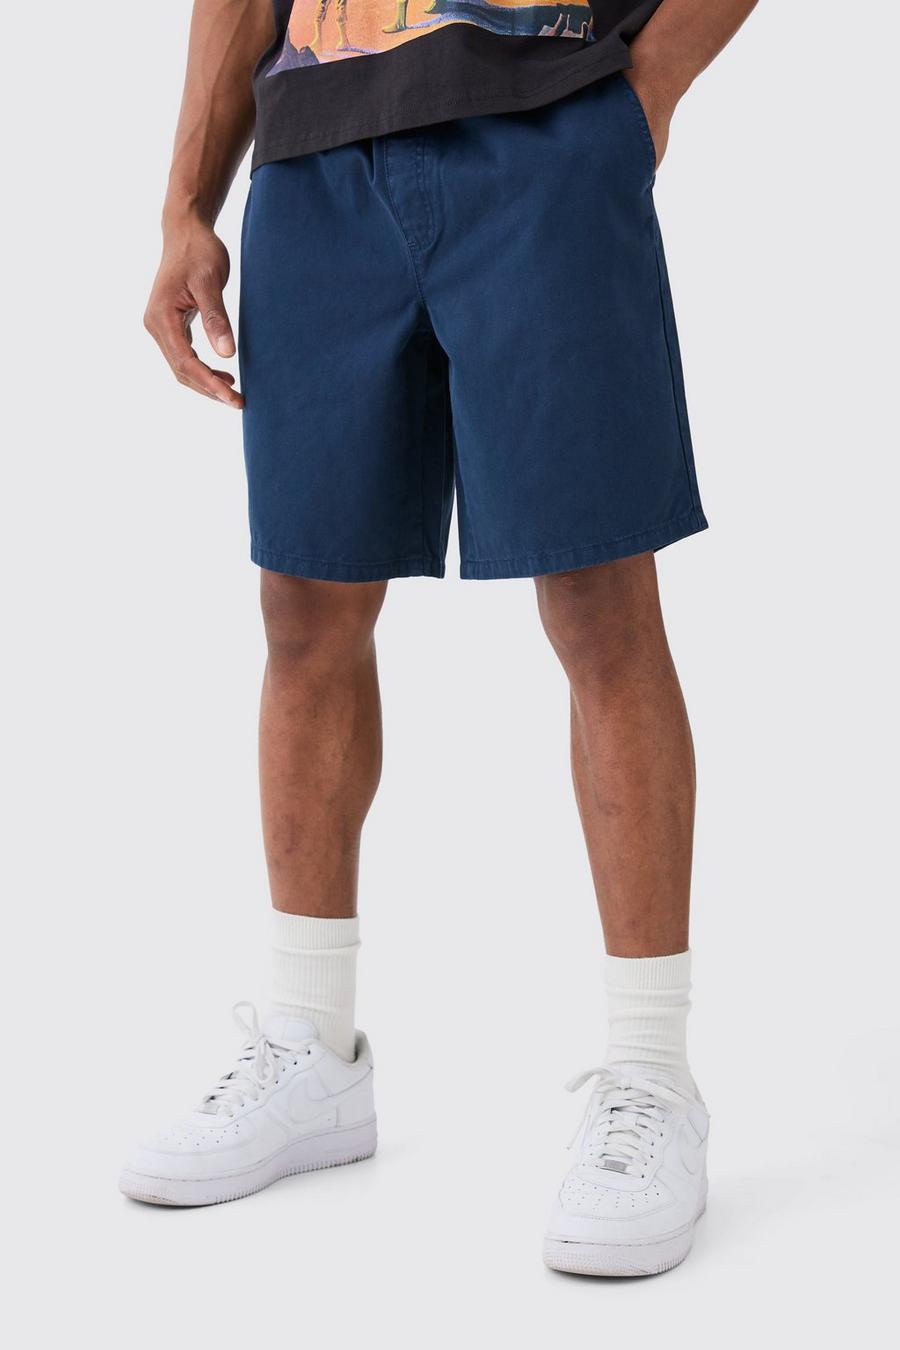 Pantalón corto holgado Everyday en azul marino, Navy image number 1